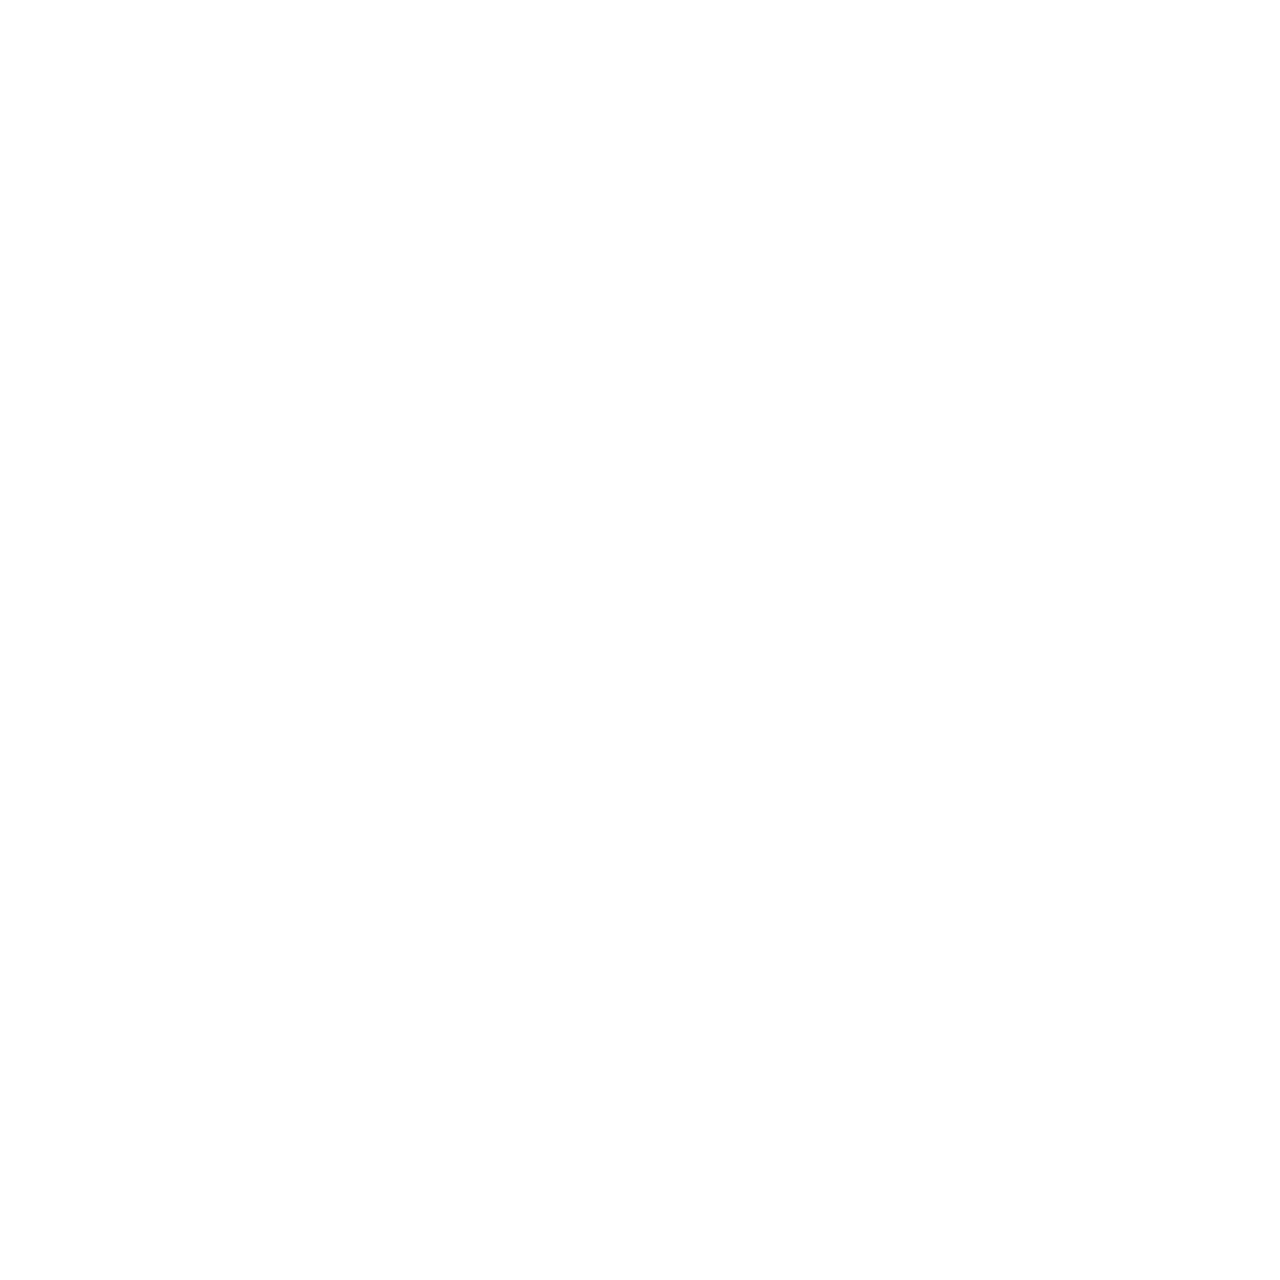 wright espress logo2